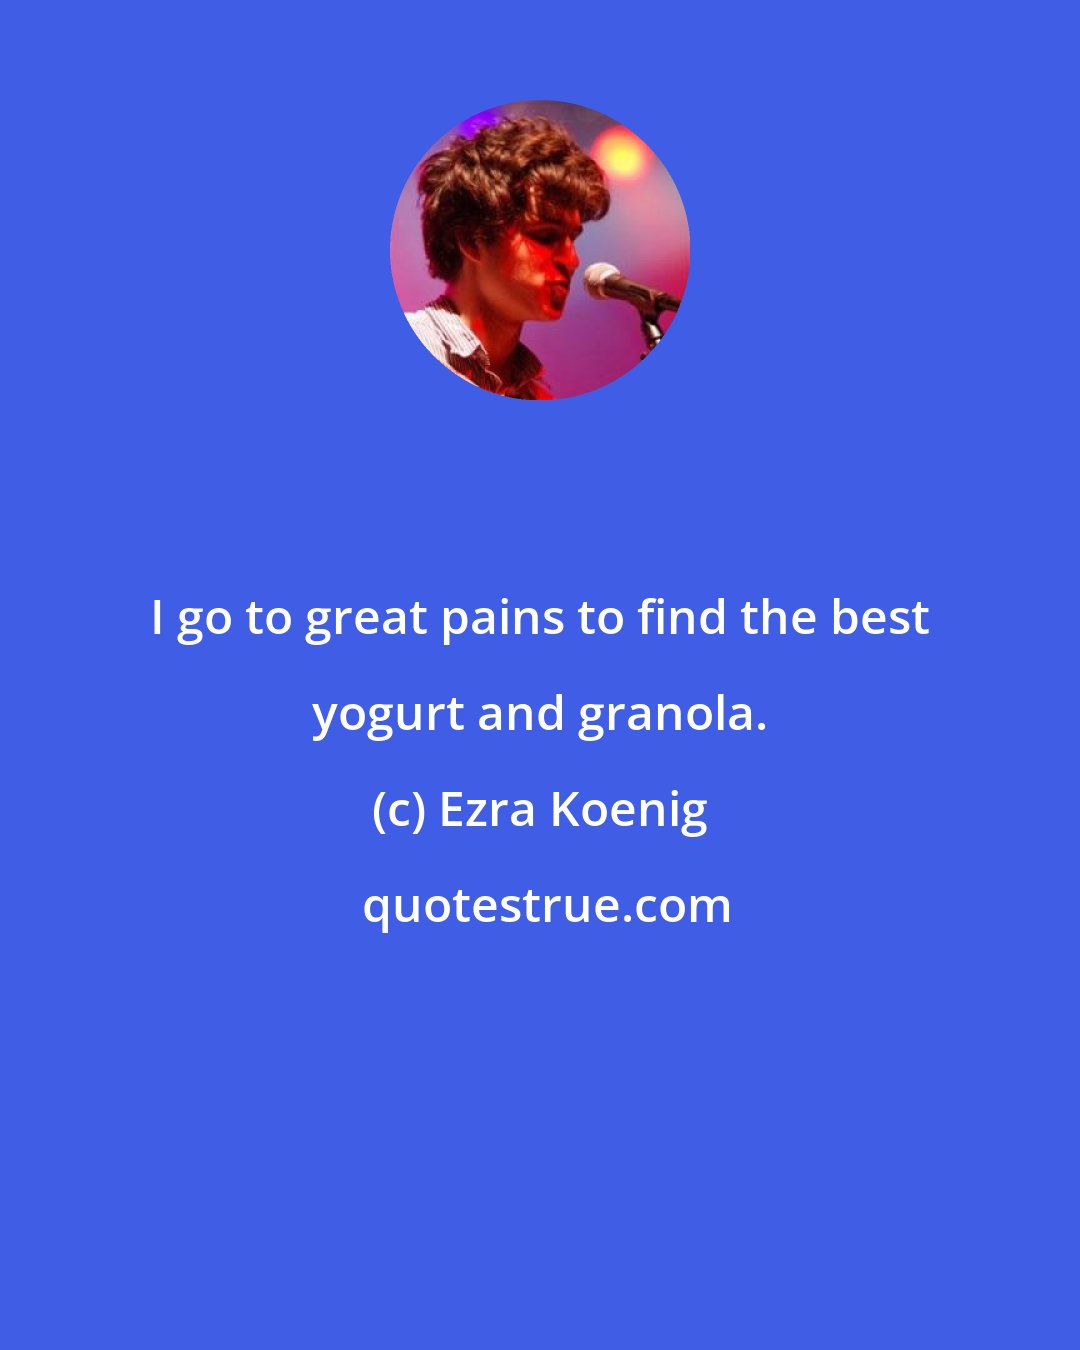 Ezra Koenig: I go to great pains to find the best yogurt and granola.